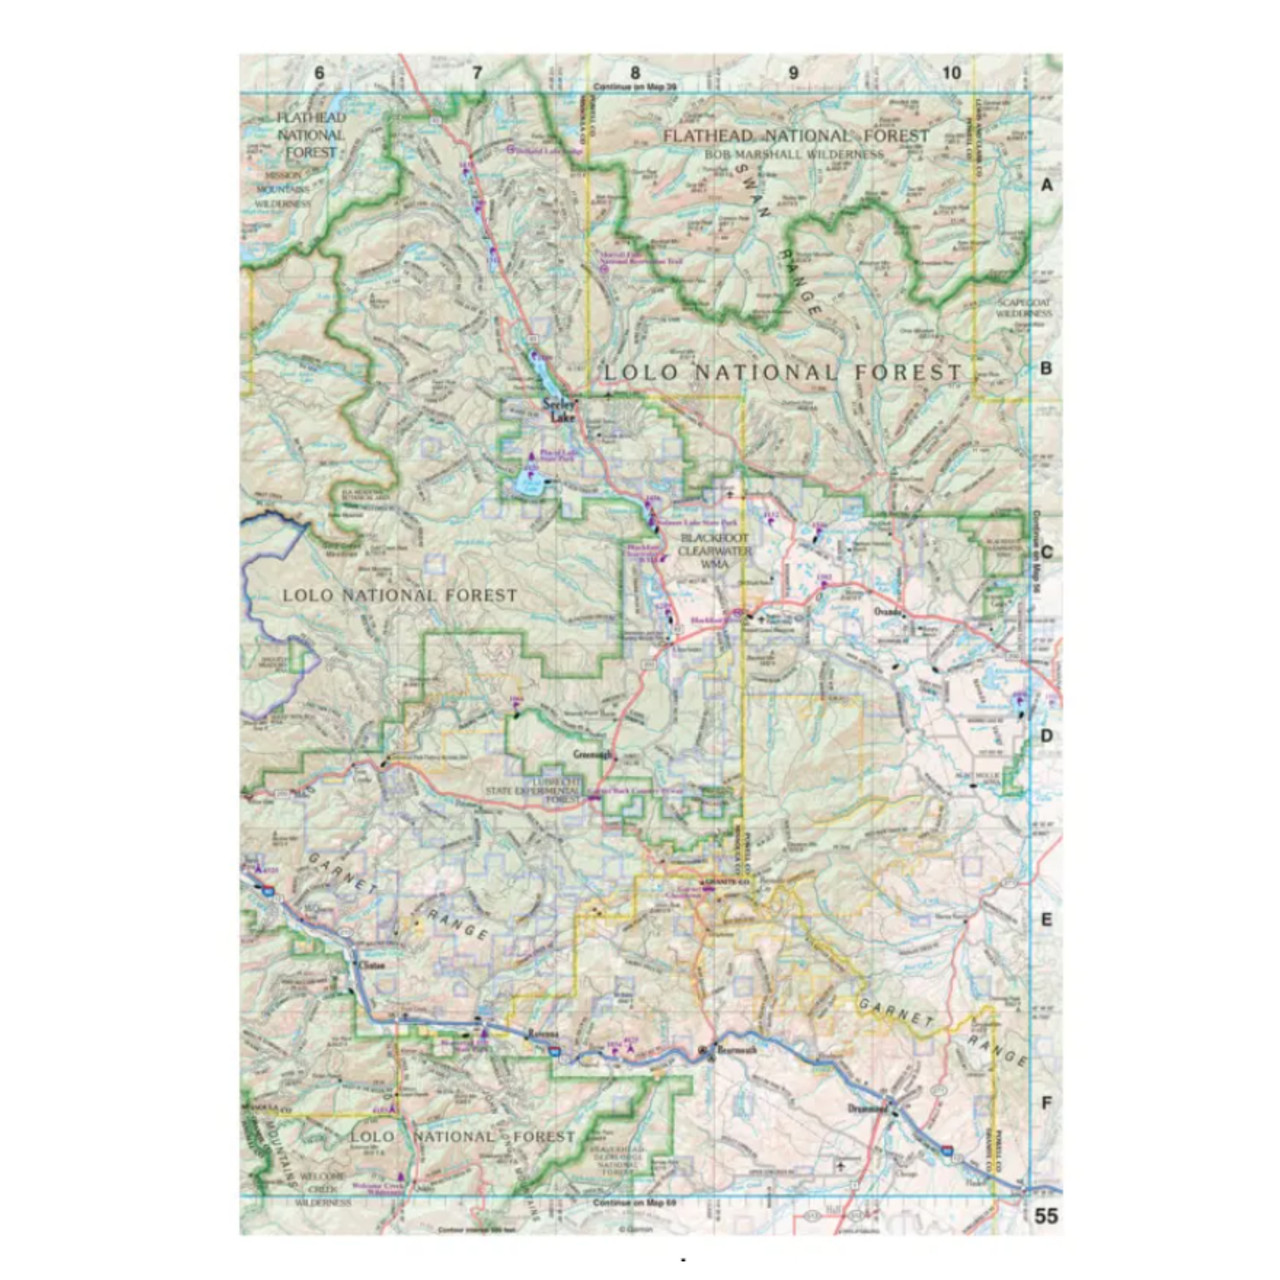 Garmin New OEM DeLorme® Atlas & Gazetteer Paper Maps Montana, 010-12655-00